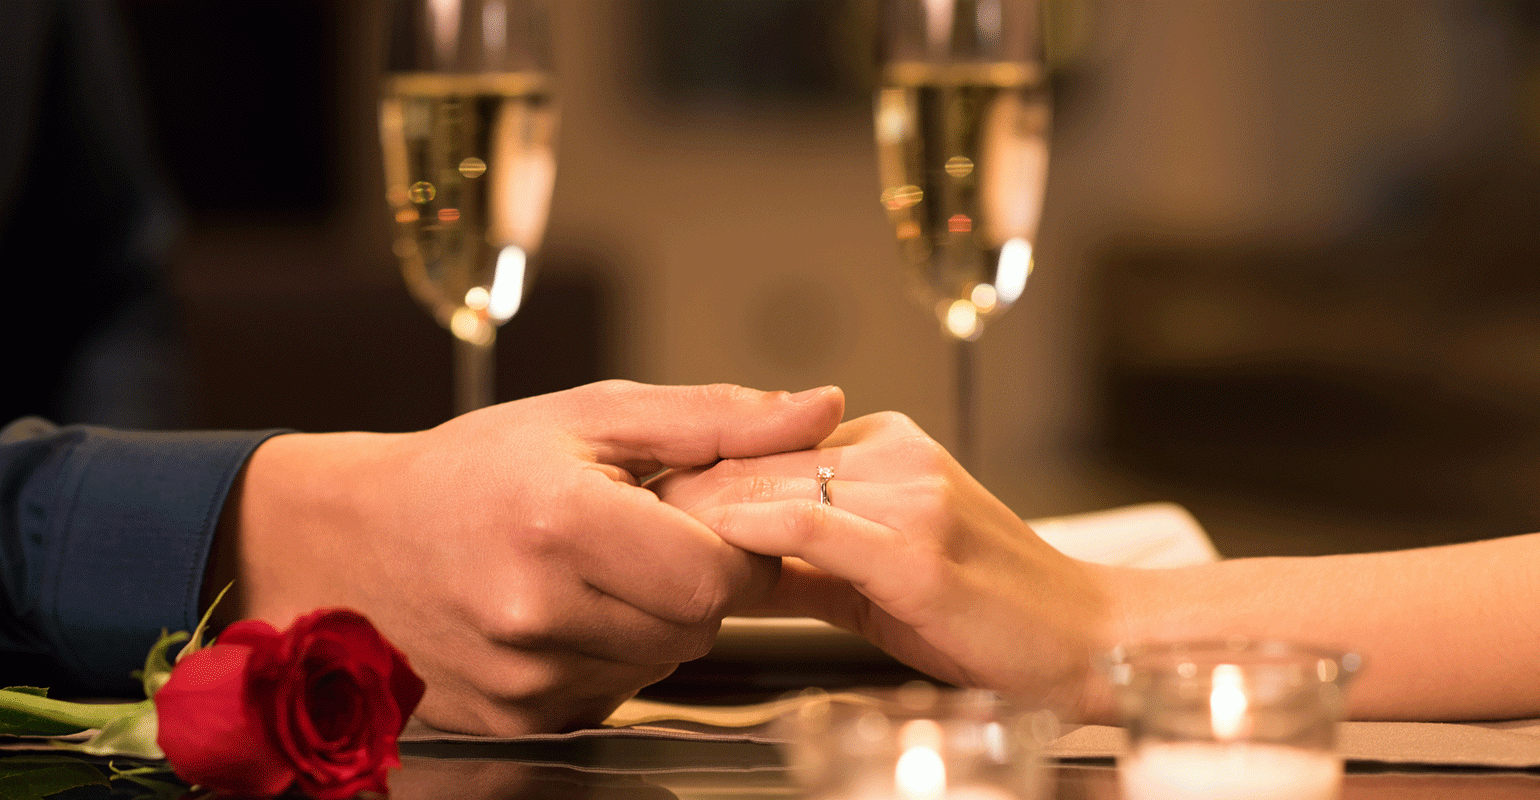 Online daters reject romantic restaurant dinners | Restaurant Hospitality